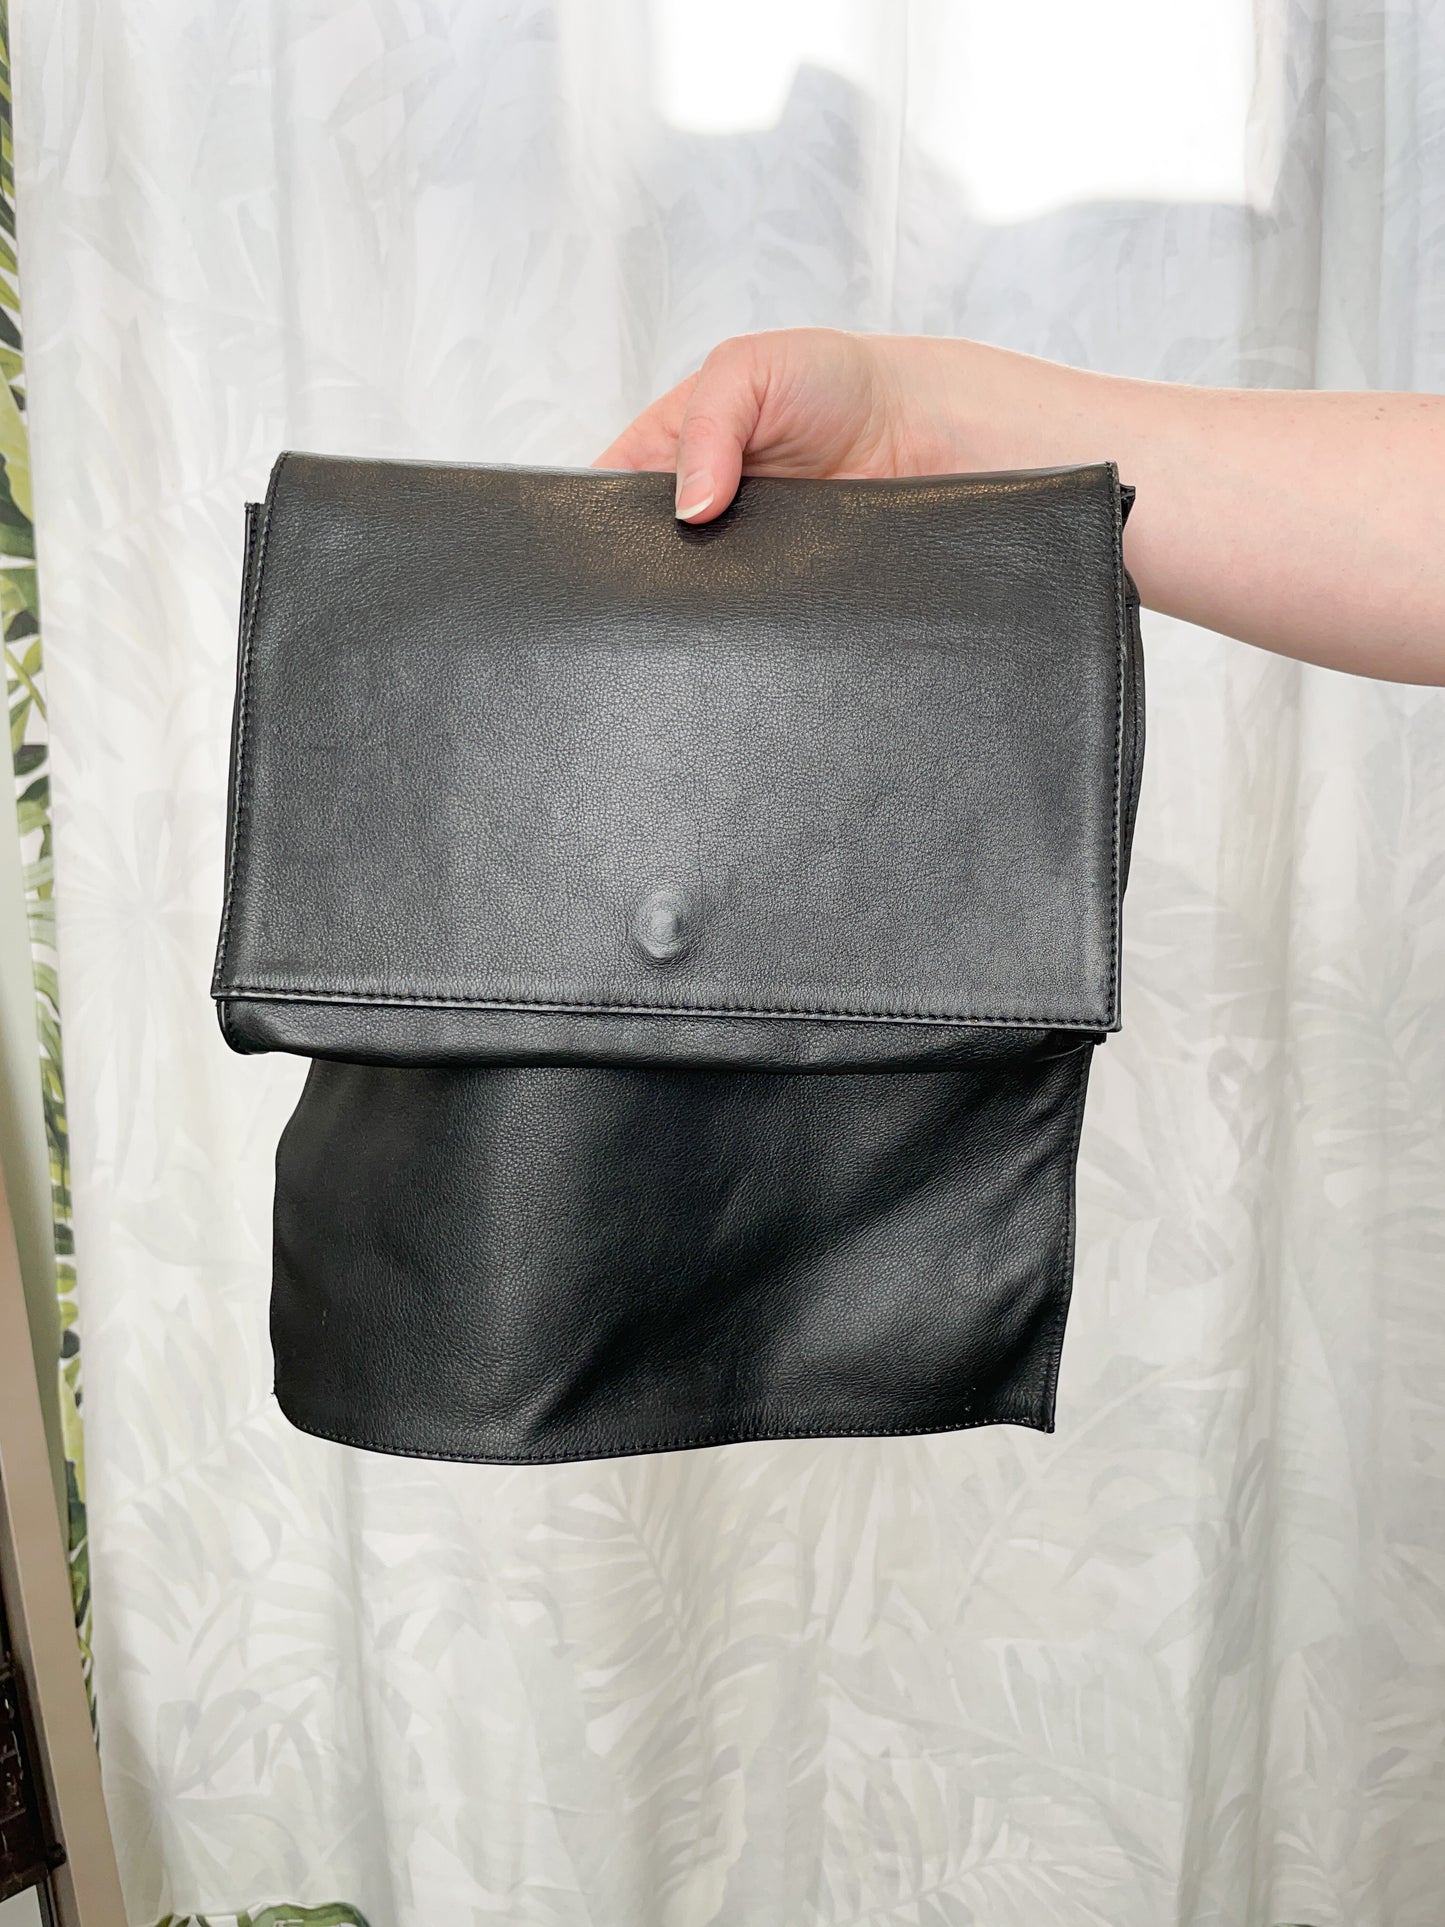 El-Minooche Black Genuine Leather Edgy Envelope Clutch Bag